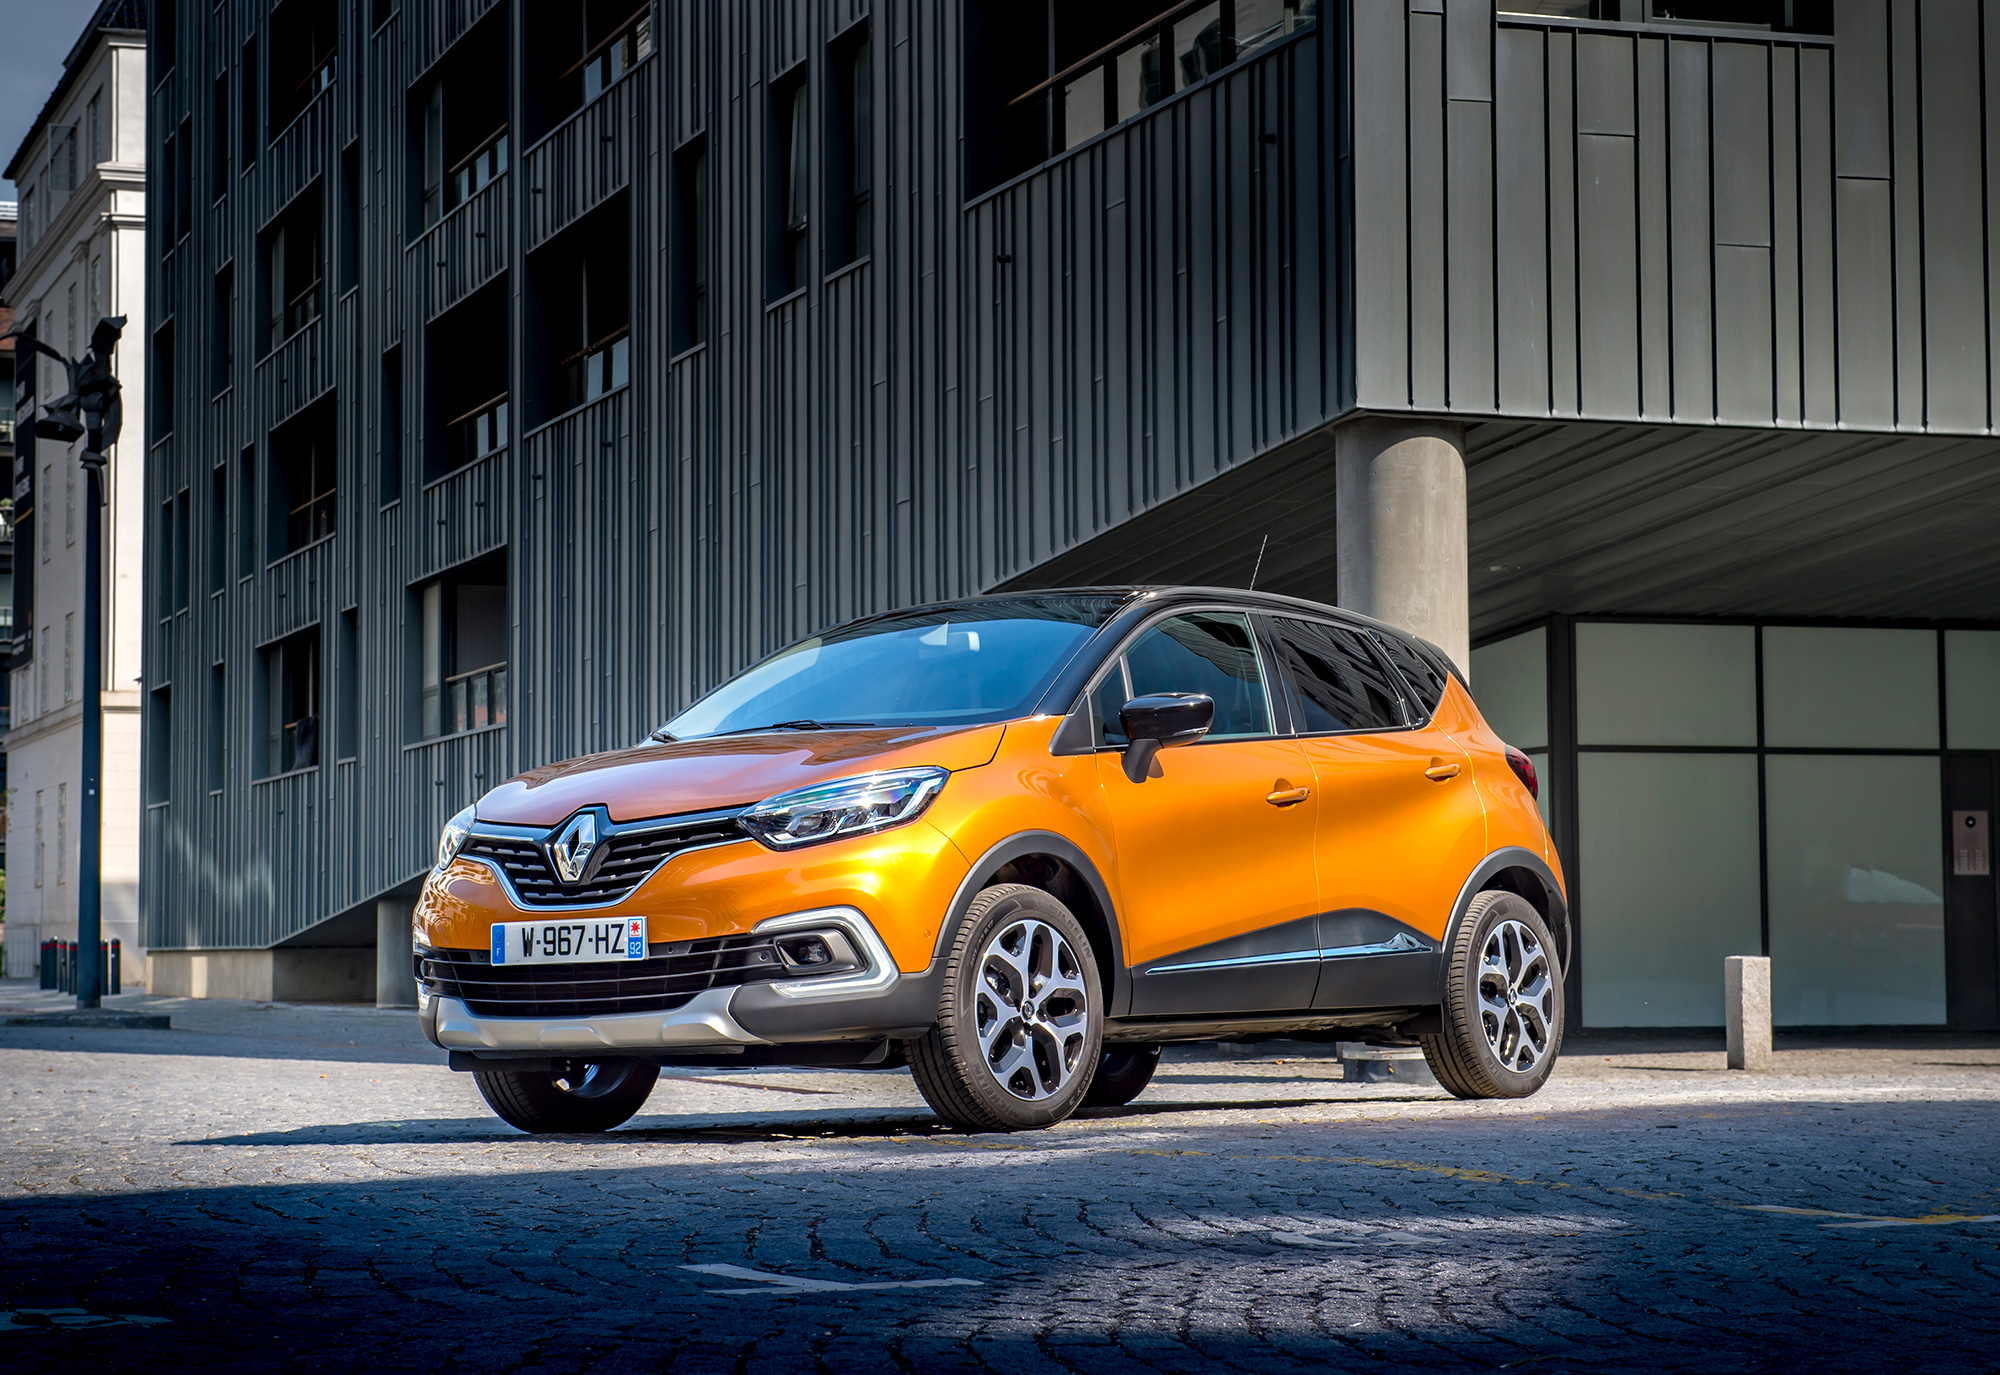 Lead---New-Renault-Captur---International-Test-Drive,-Copenhagen---May-2017-(61).jpg